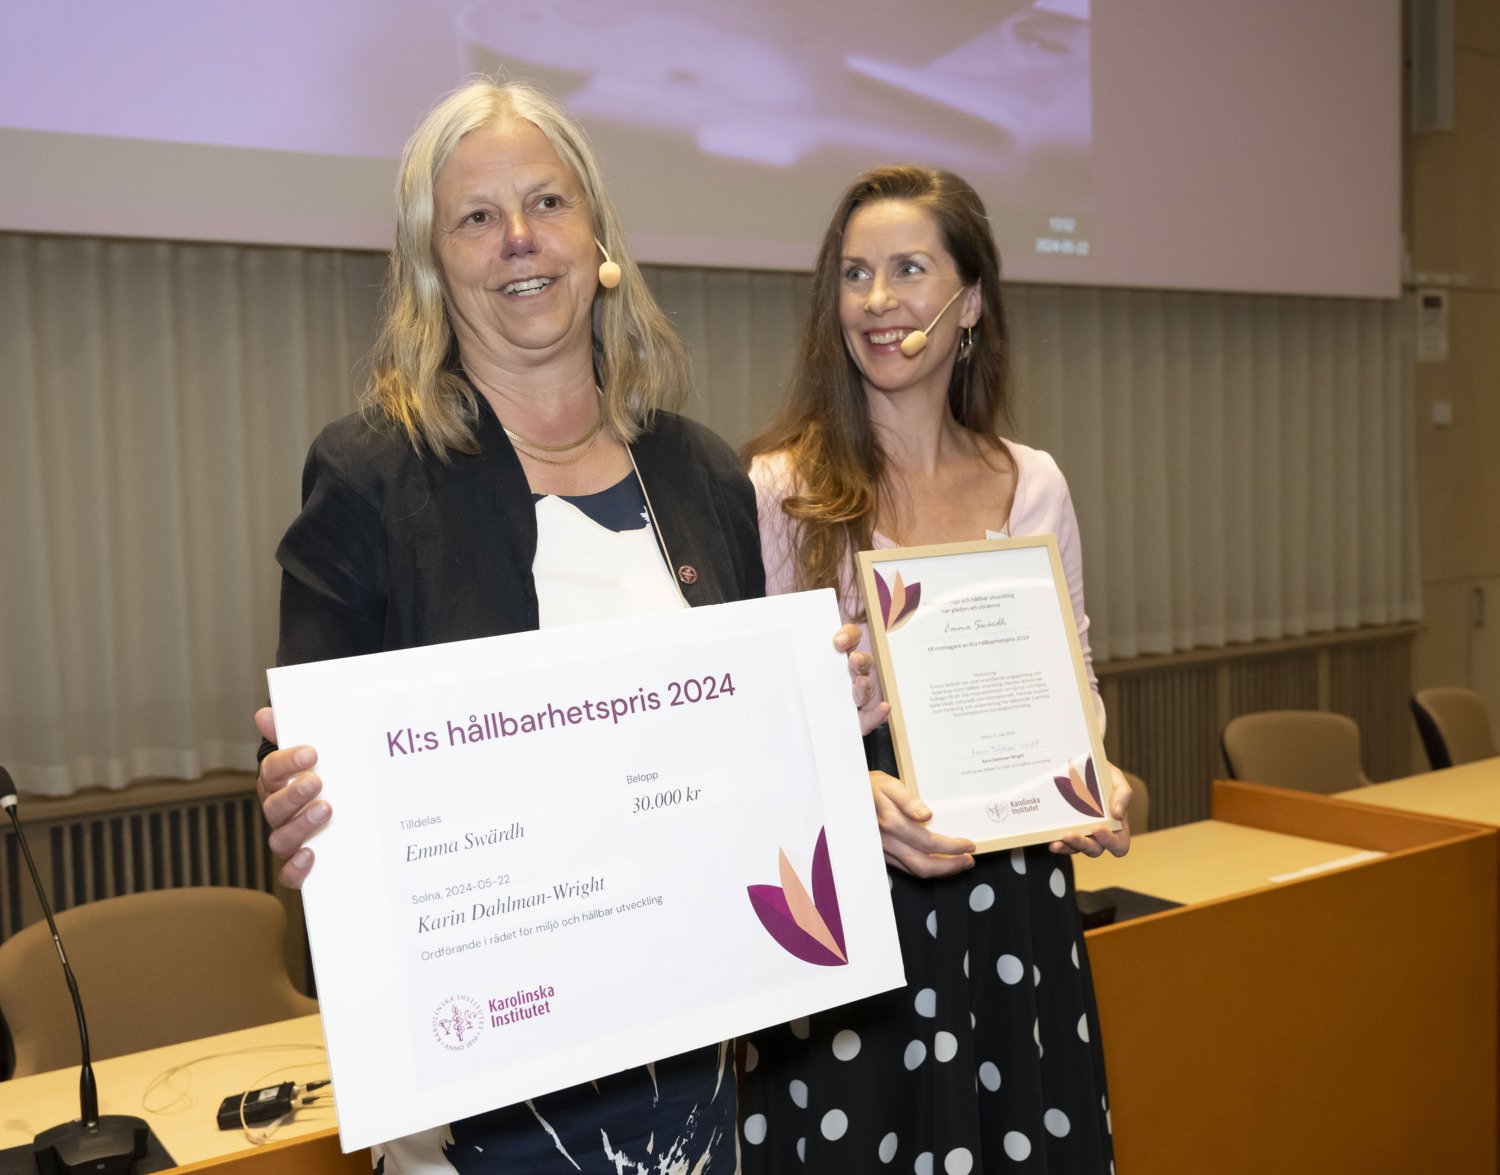 Kerstin Dahlman-Wright presented this year's sustainability award to Emma Swärdh during KI's Sustainability Day on May 22.